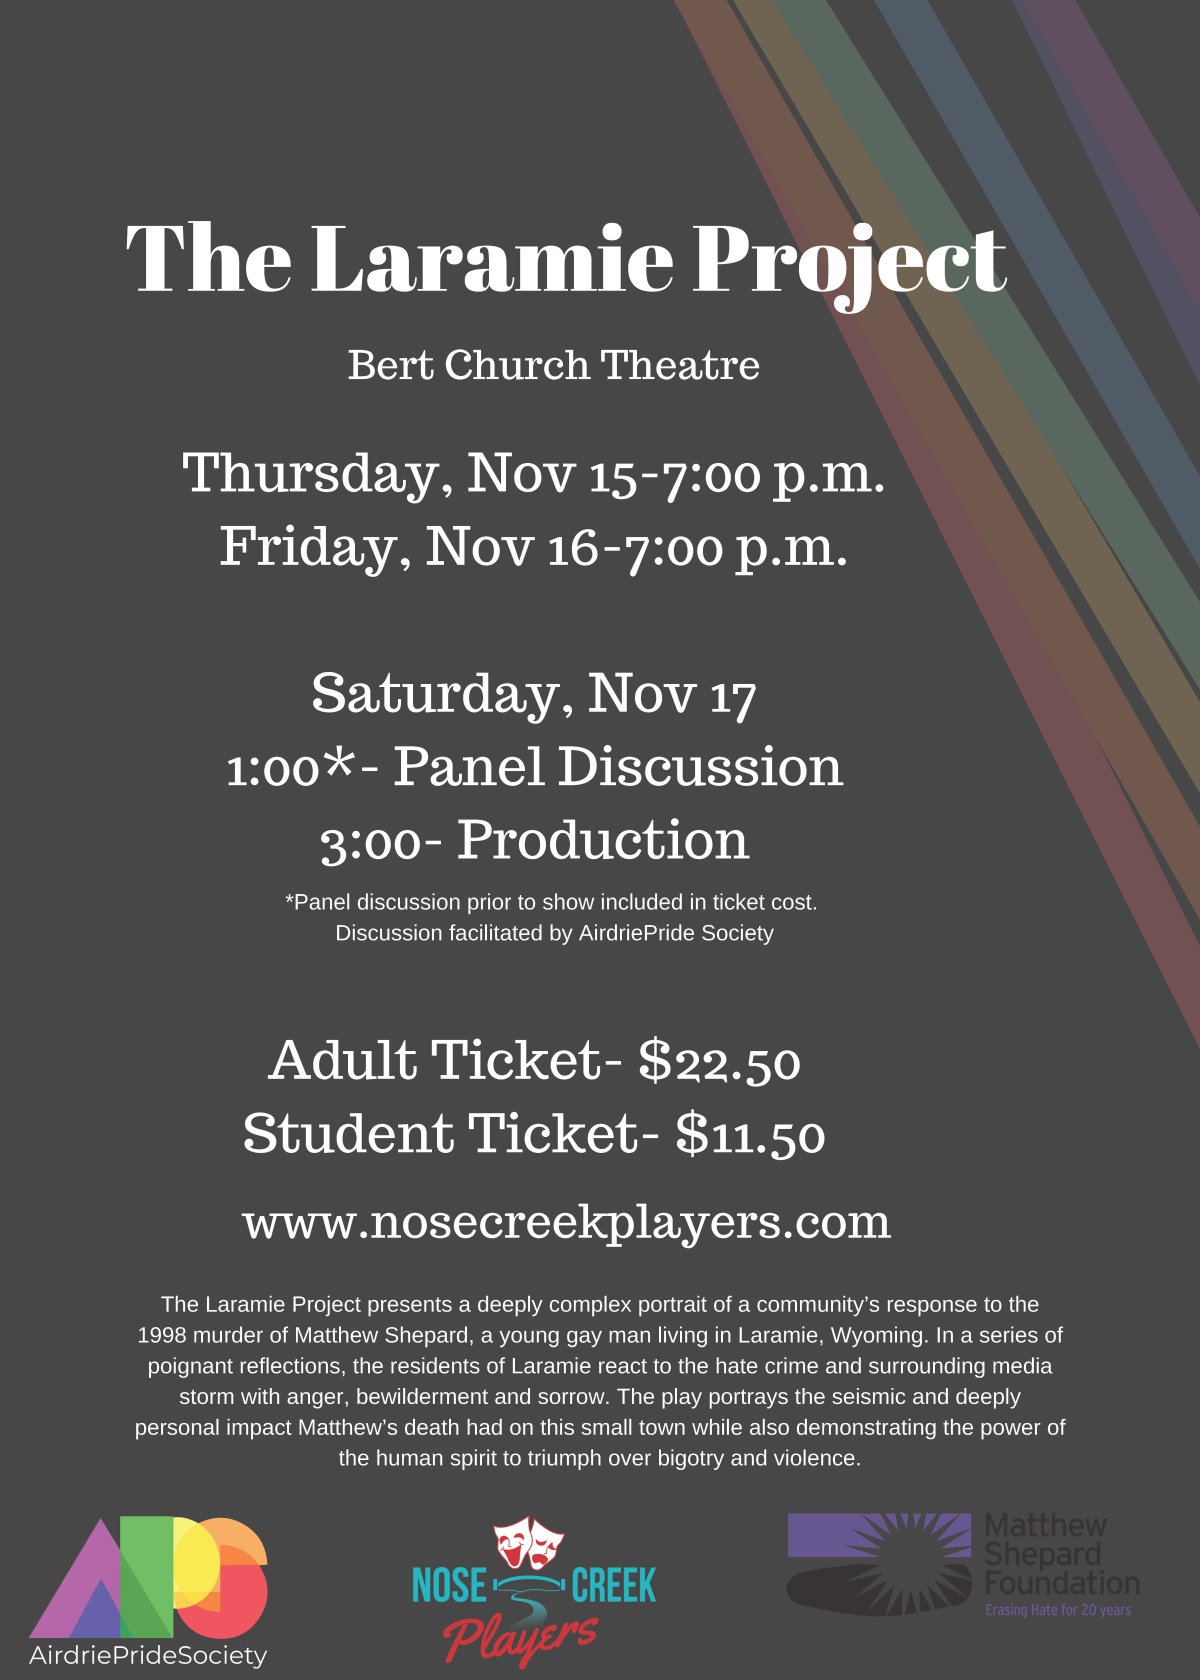 The Laramie Project - image